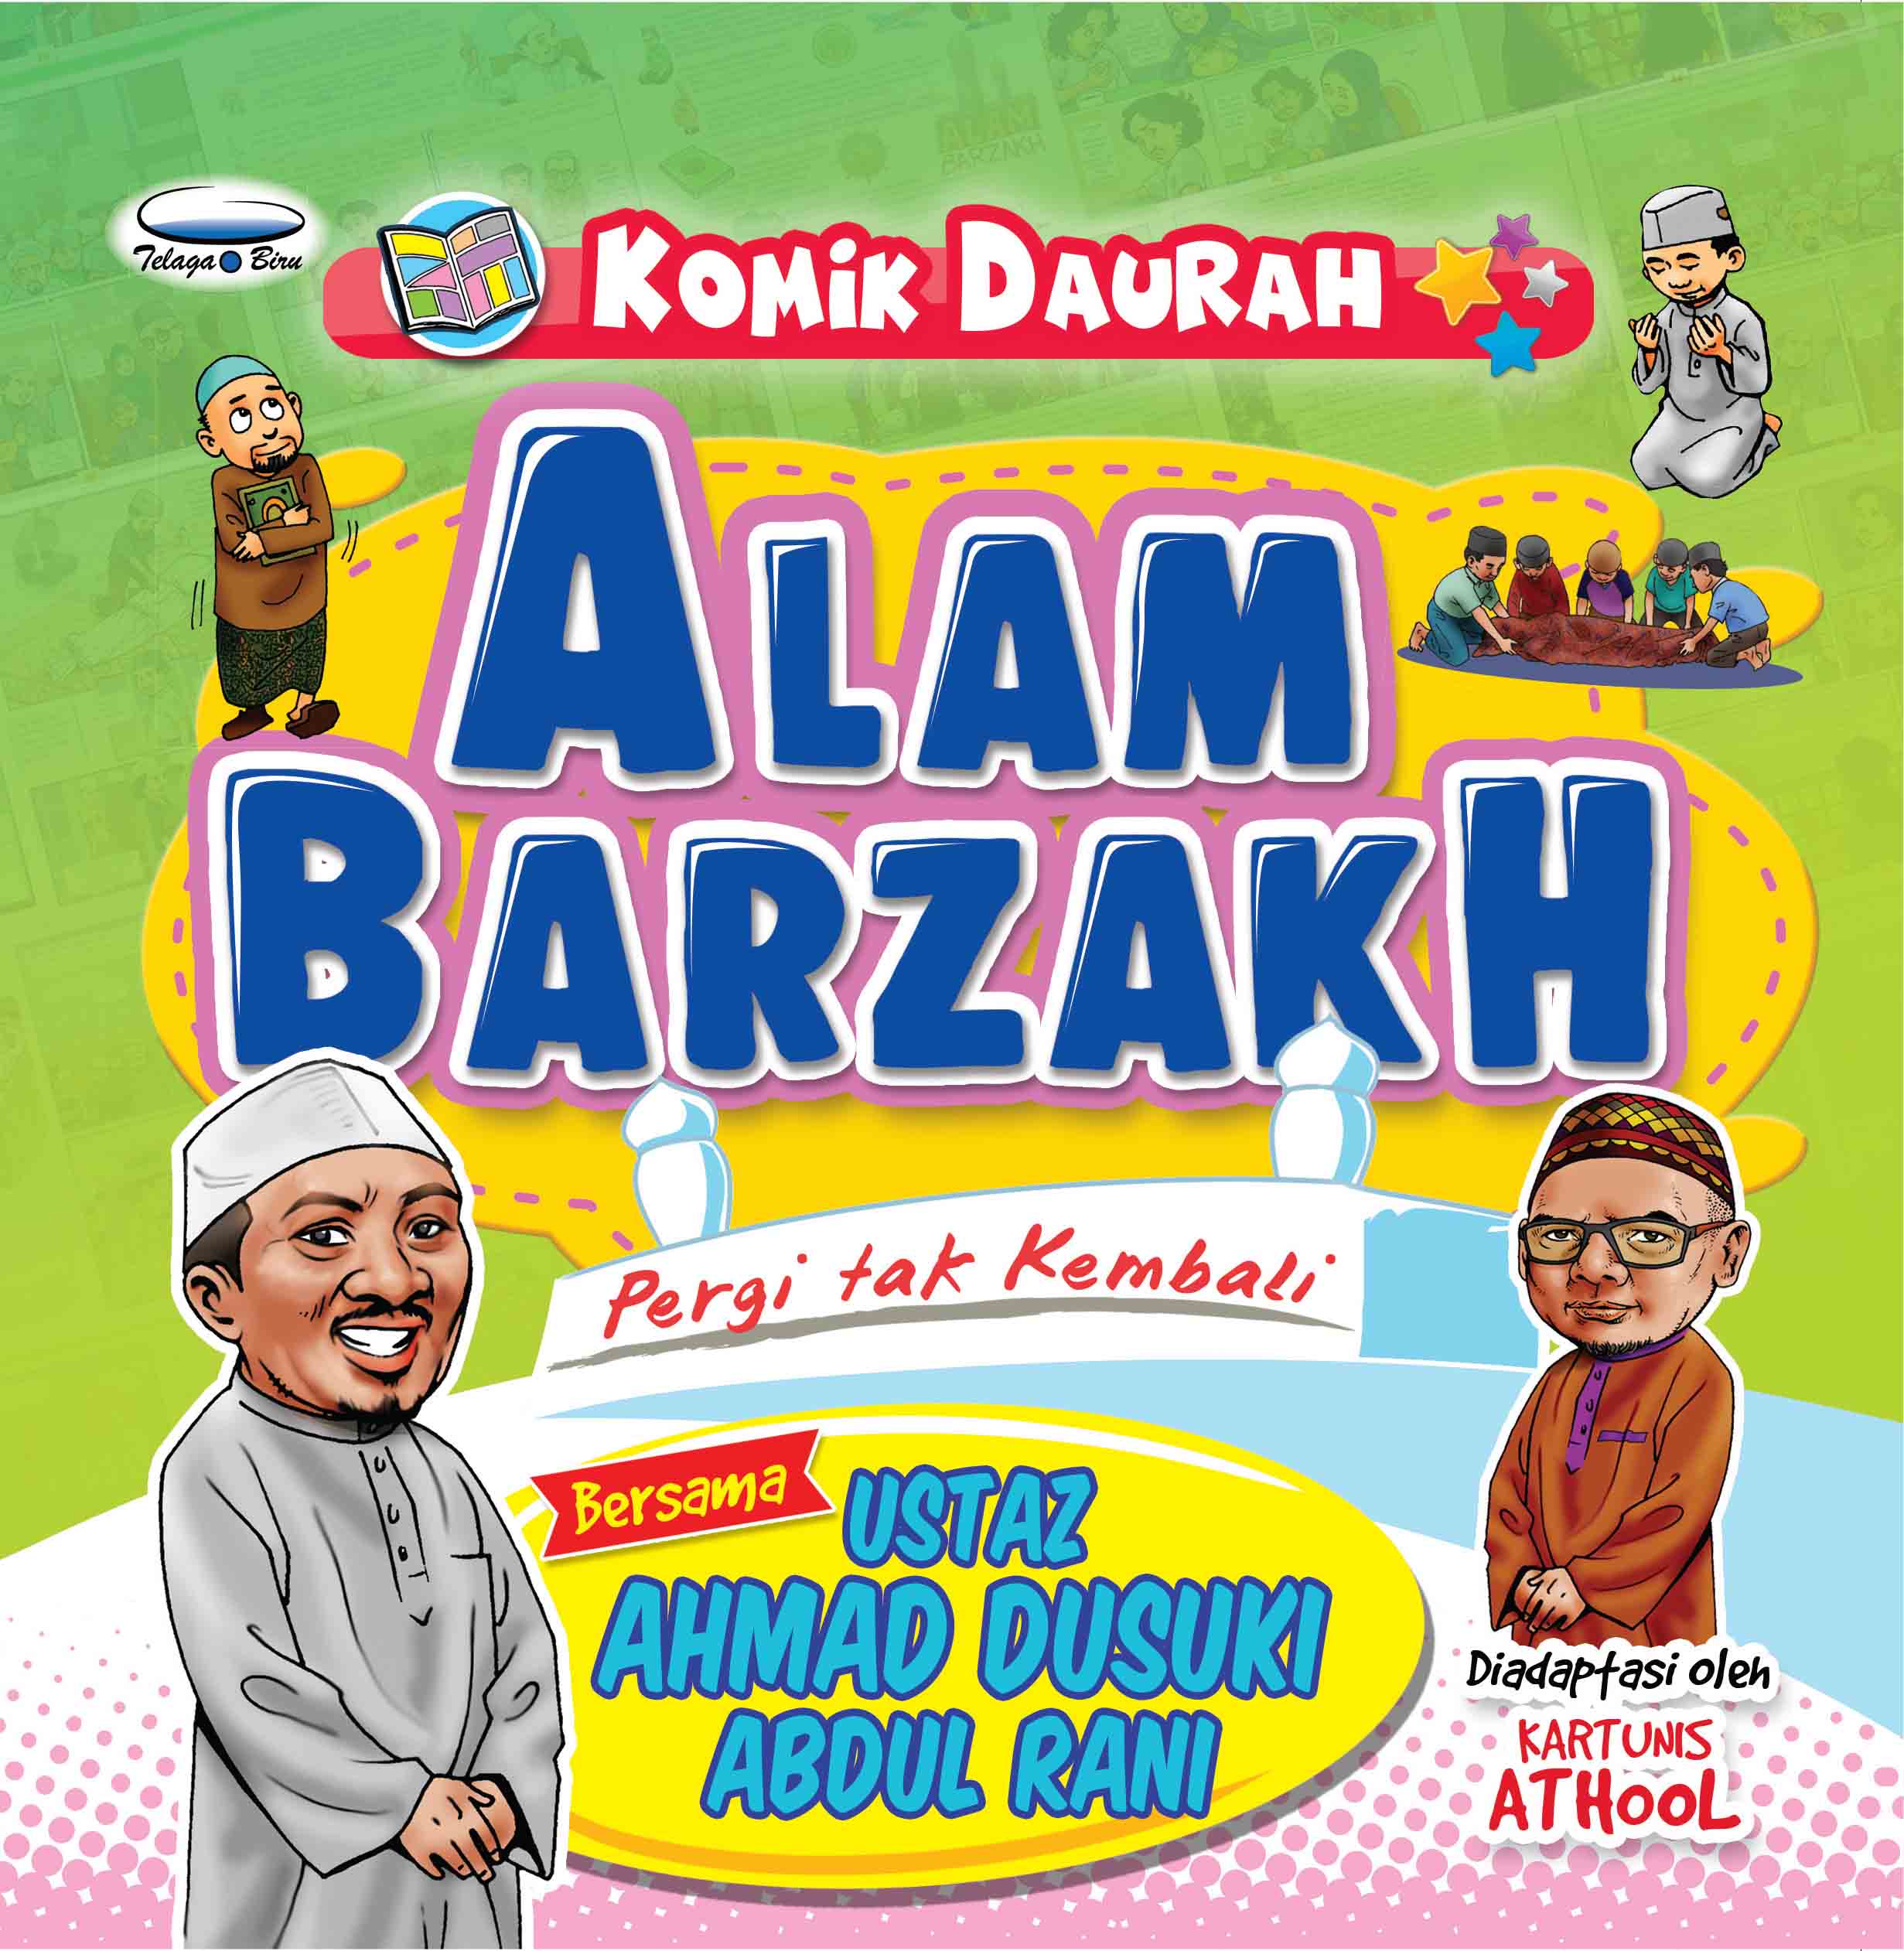 Komik Daurah Alam Barzakh - (TBBK1447)